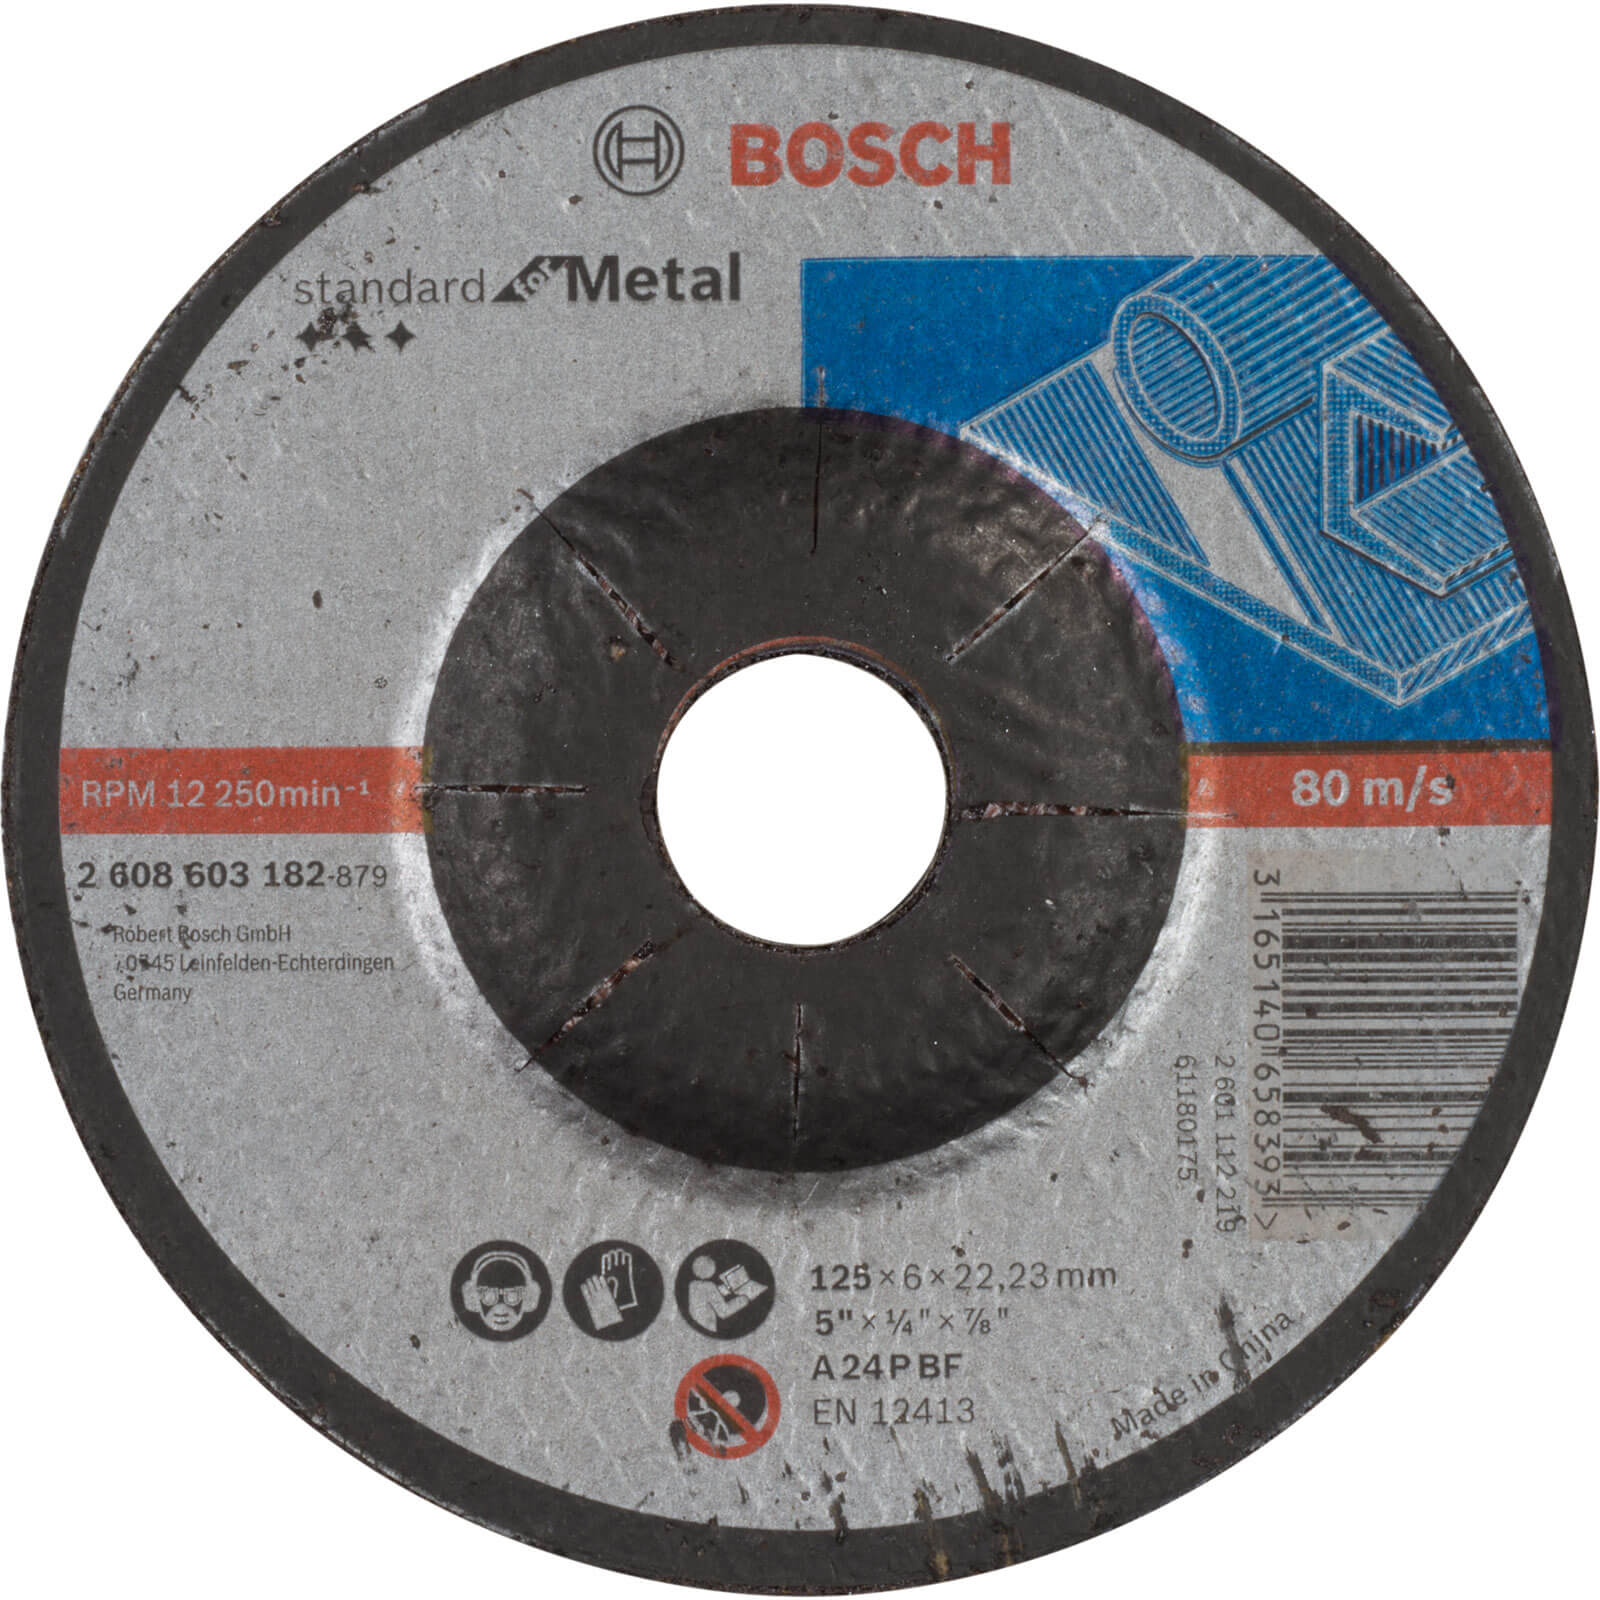 Photo of Bosch Standard Depressed Centre Metal Grinding Disc 125mm 6mm 22mm